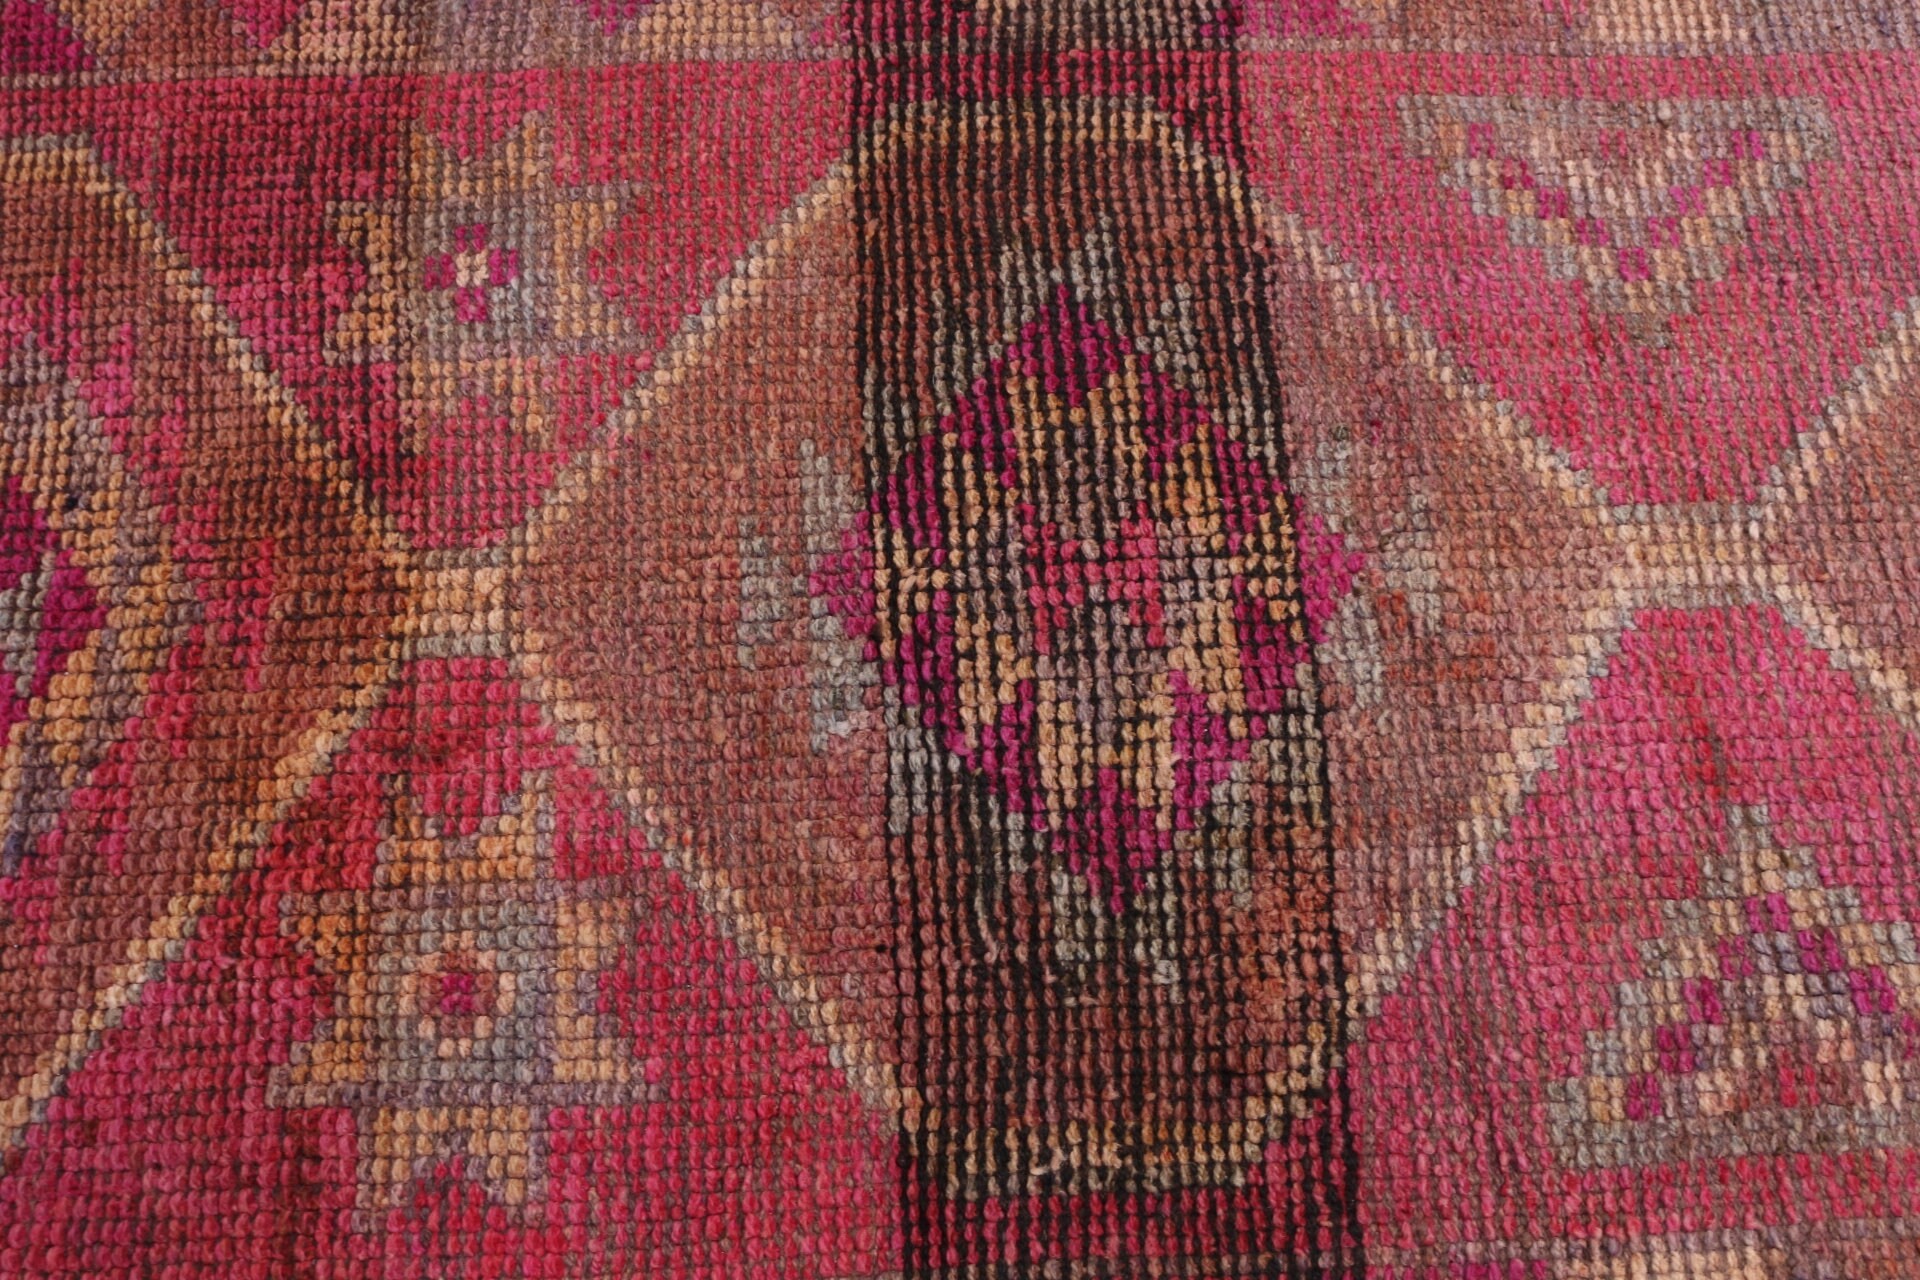 Rugs for Corridor, Bedroom Rug, Pink Antique Rugs, Handwoven Rug, 3x10.2 ft Runner Rug, Vintage Rug, Turkish Rug, Hallway Rug